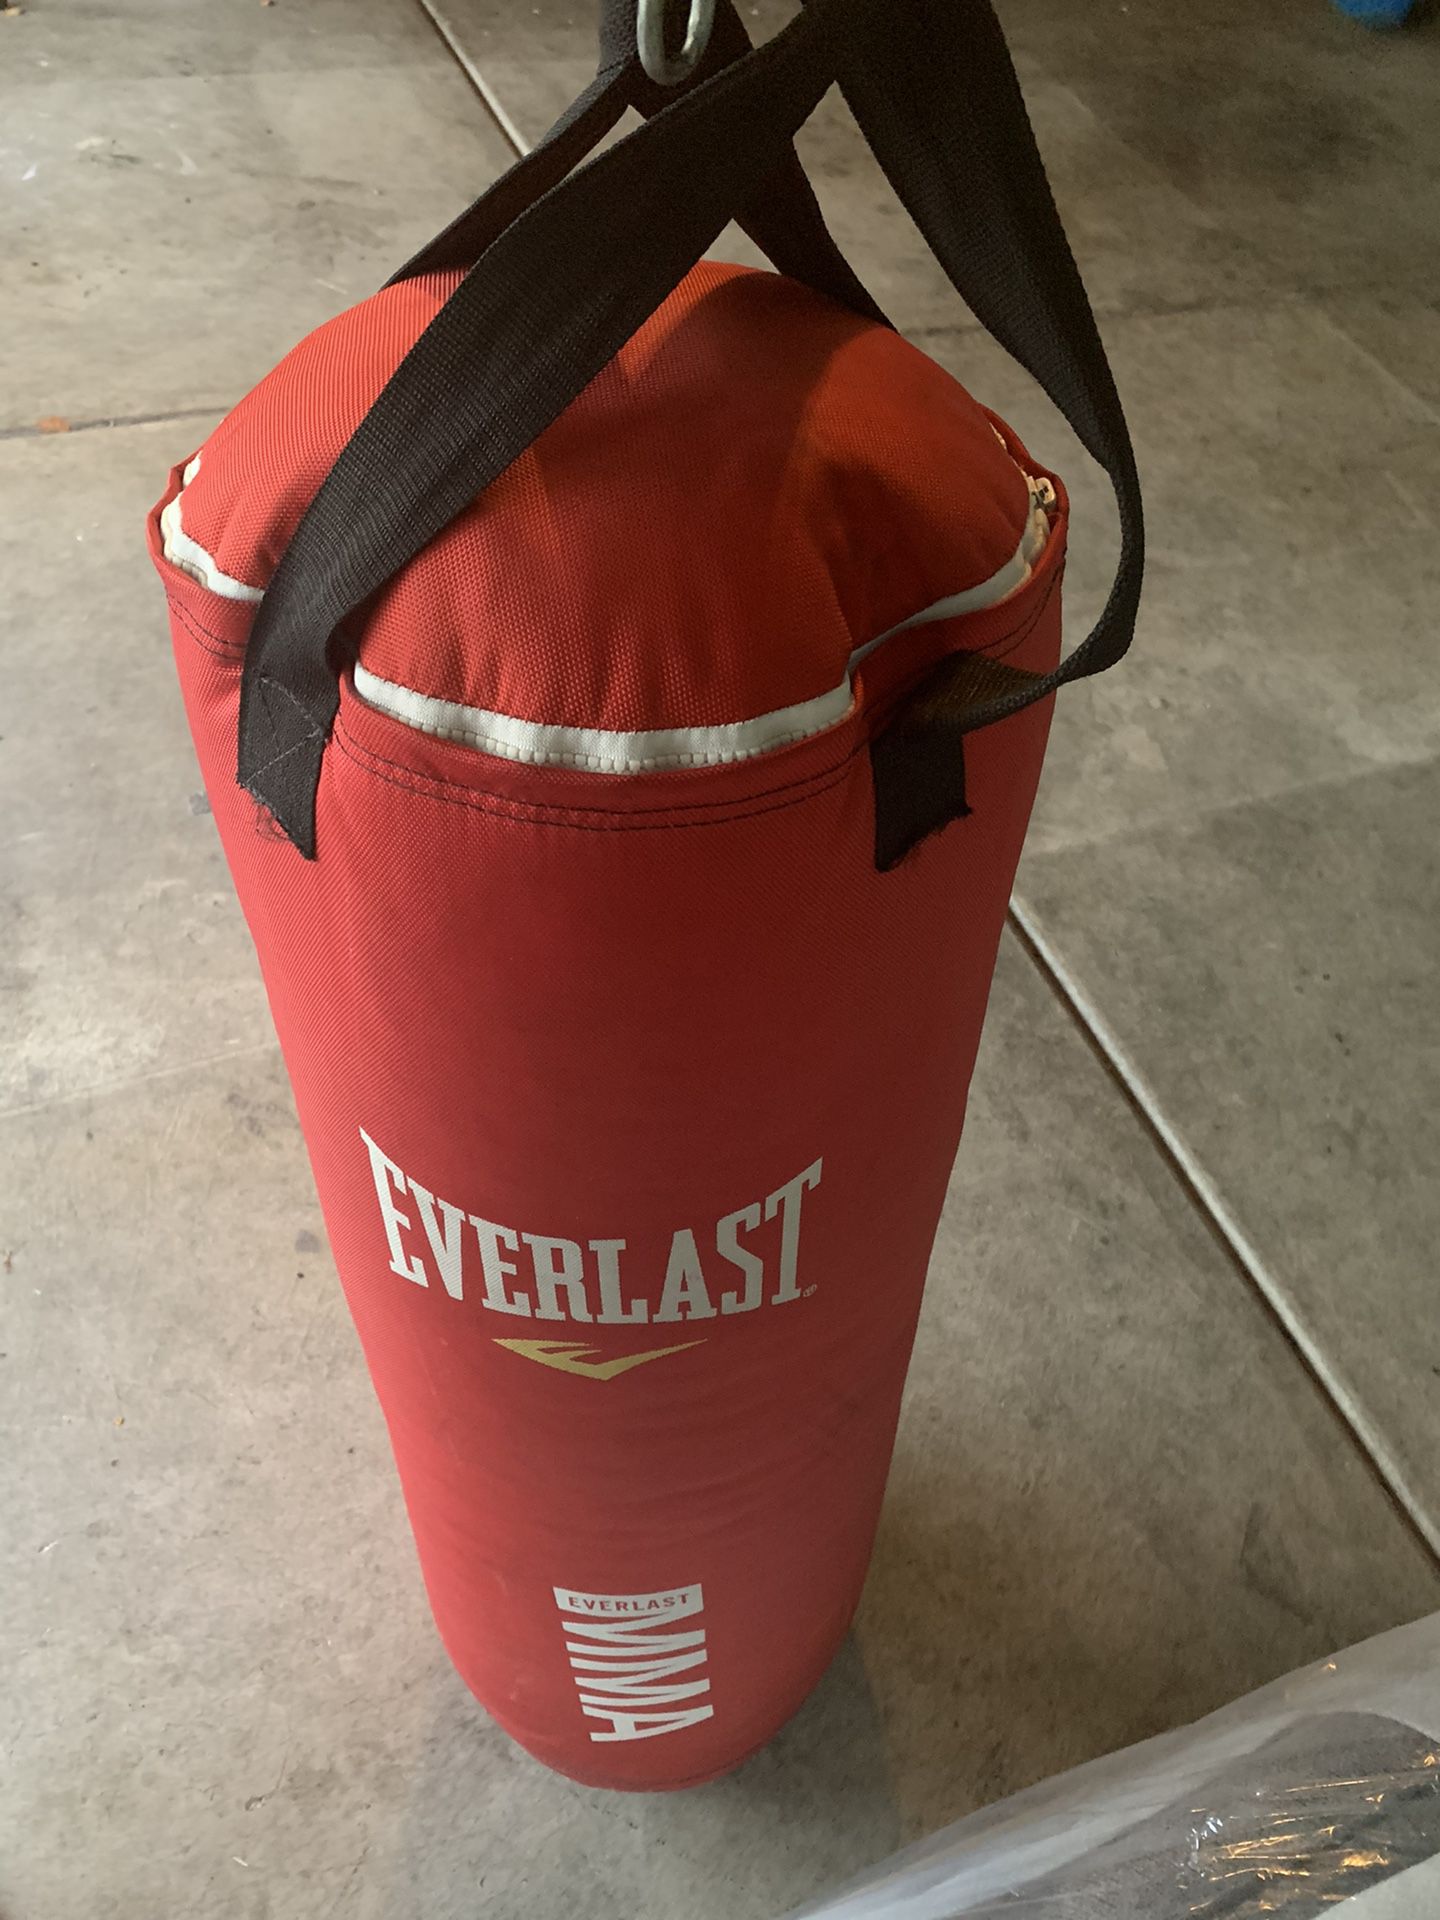 Everlast - punching bag